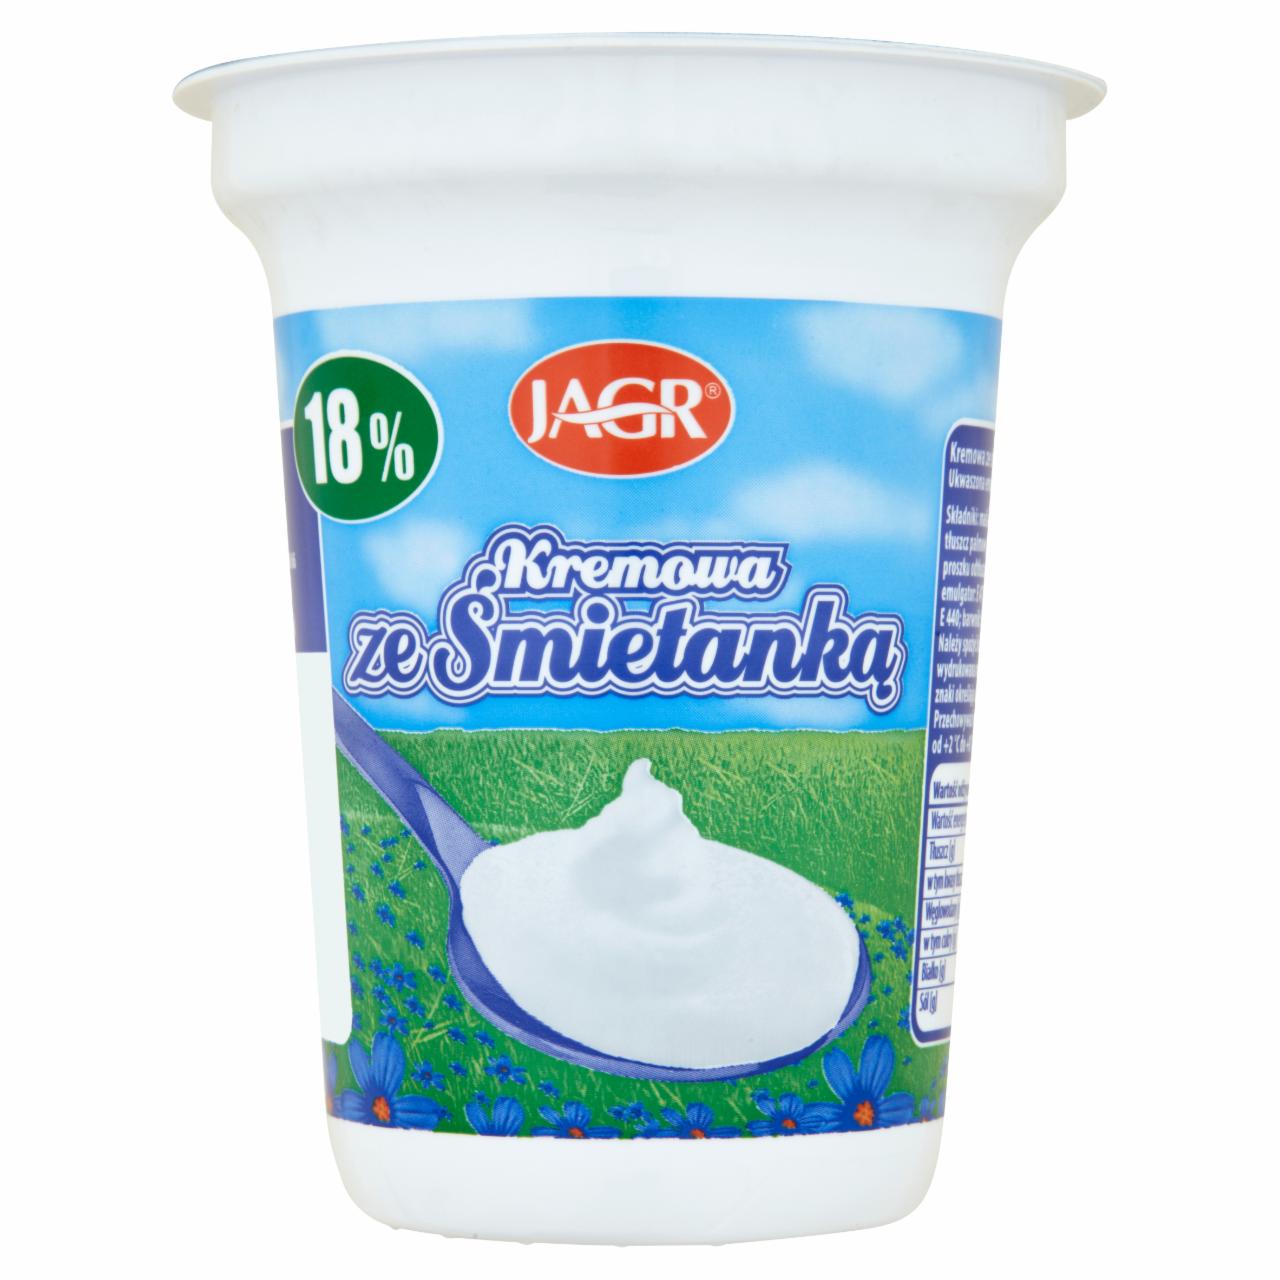 Photo - Jagr Creamy with Long Life Cream 18% Fat Emulsion 330 g